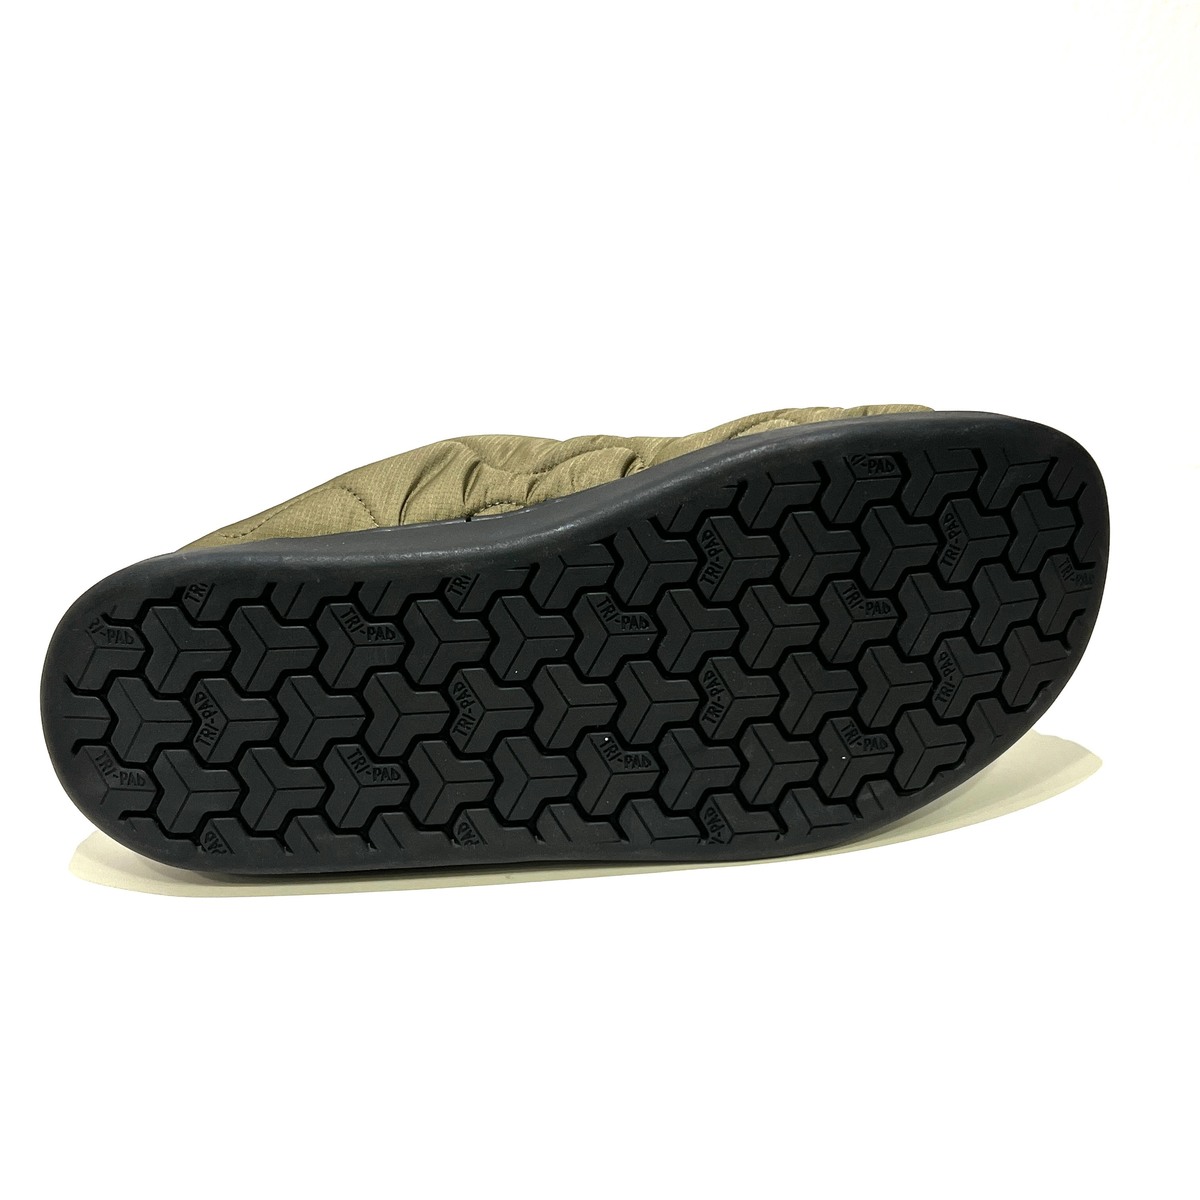 foot the coacher quilting sandals wave stitch-khaki gray - 画像5枚目